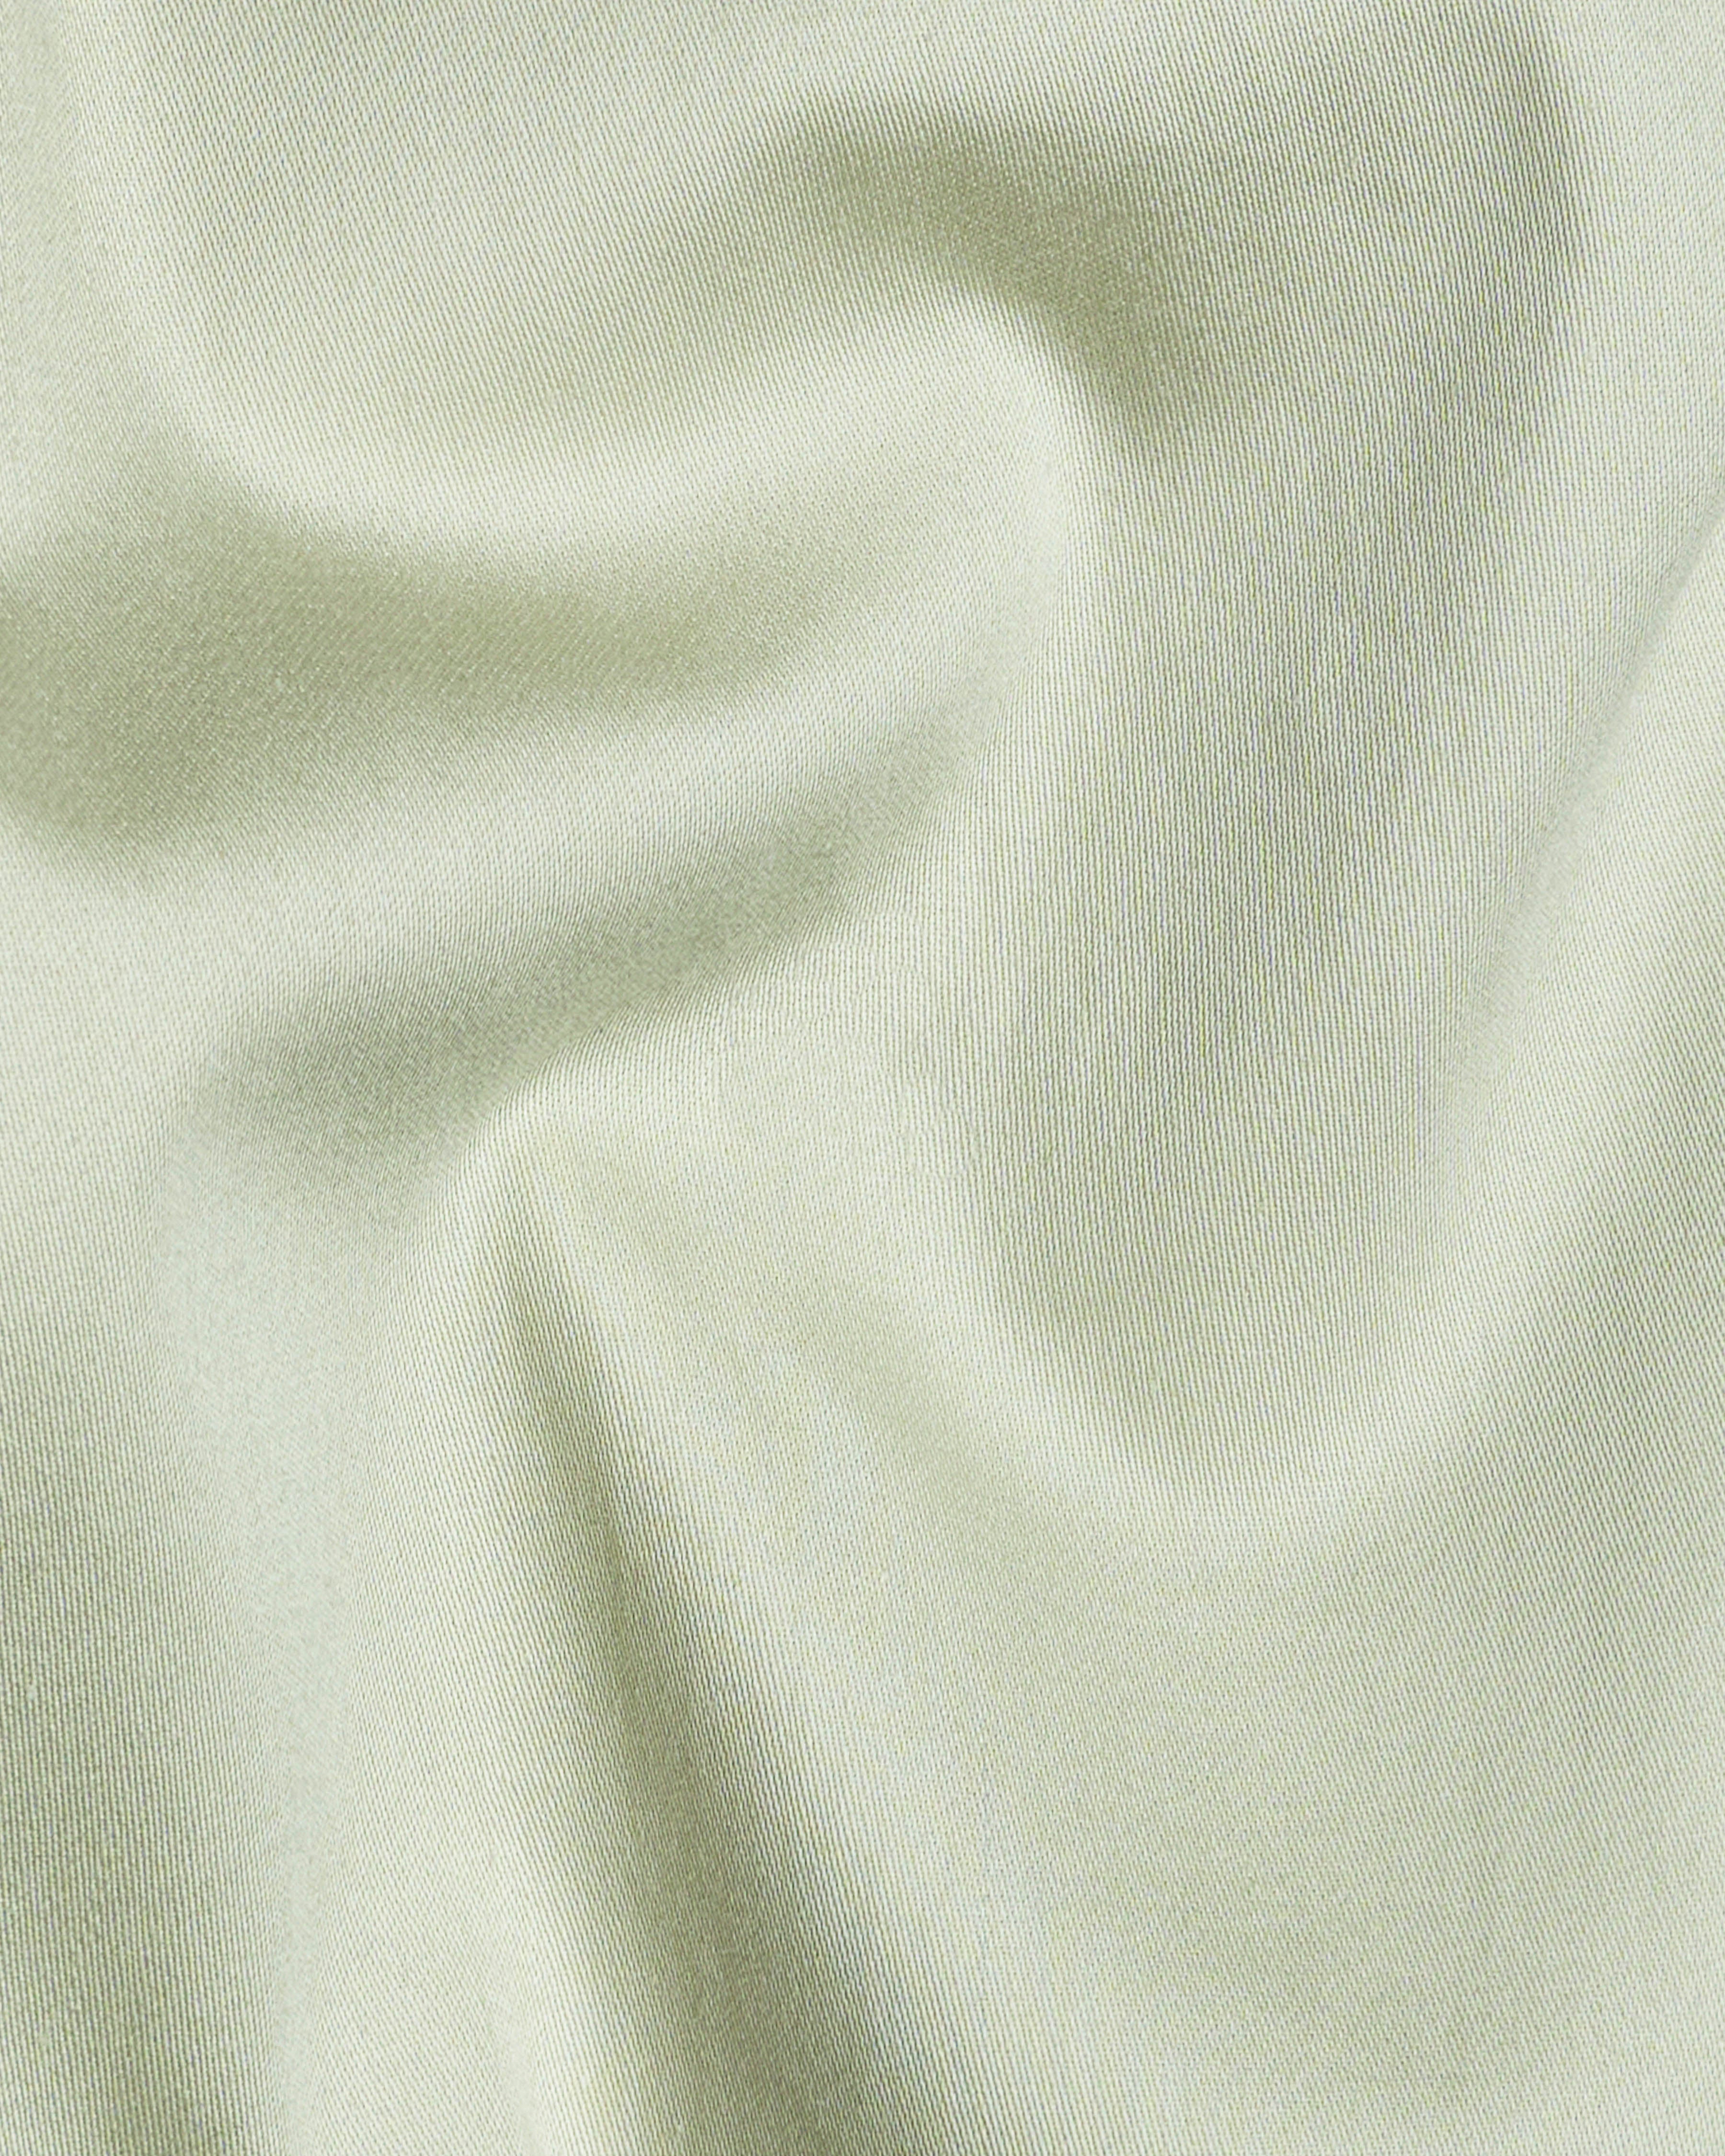 Coriander Green Super Soft Premium Cotton Shirt 8875-BLK-38, 8875-BLK-H-38,  8875-BLK-39,  8875-BLK-H-39,  8875-BLK-40,  8875-BLK-H-40,  8875-BLK-42,  8875-BLK-H-42,  8875-BLK-44,  8875-BLK-H-44,  8875-BLK-46,  8875-BLK-H-46,  8875-BLK-48,  8875-BLK-H-48,  8875-BLK-50,  8875-BLK-H-50,  8875-BLK-52,  8875-BLK-H-52